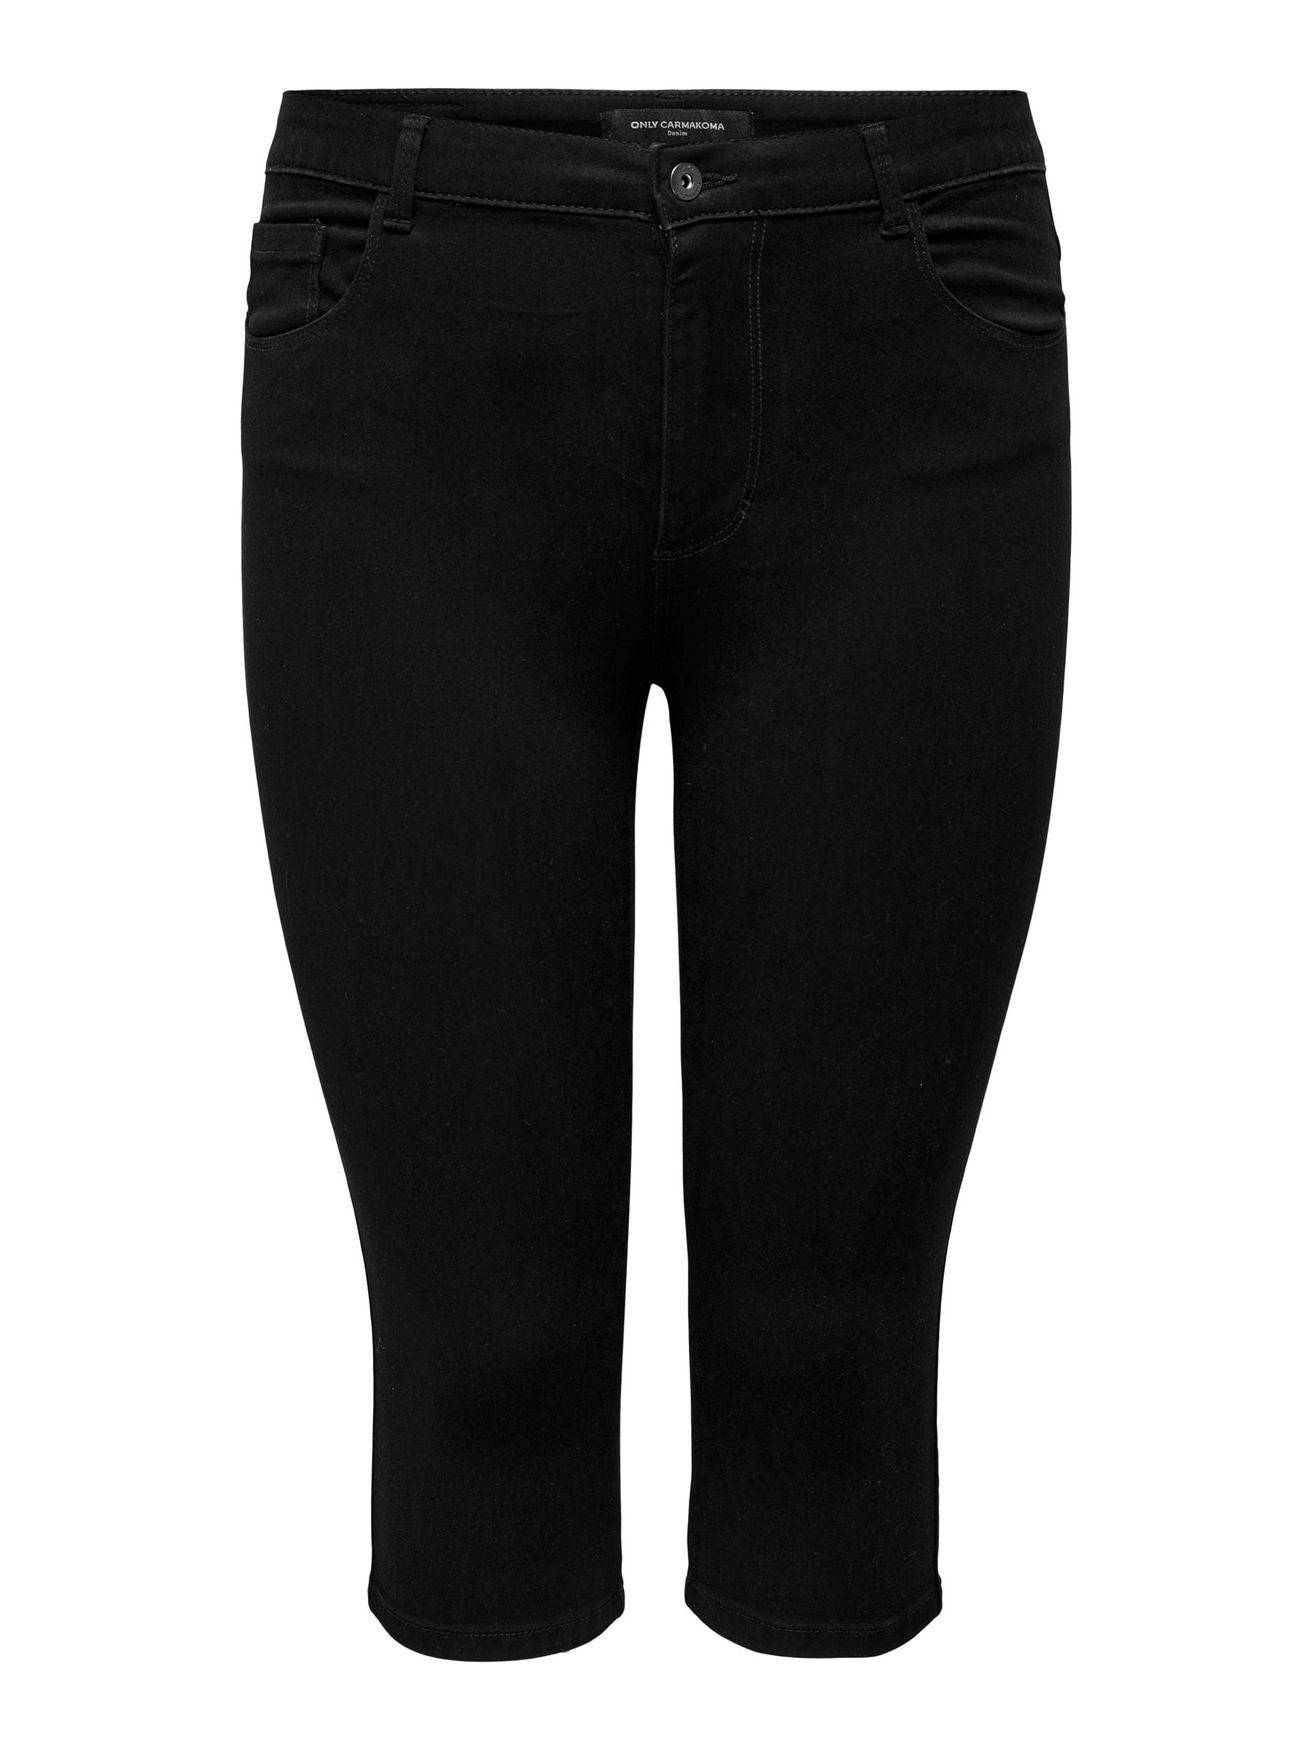 Caprihose Jeans Übergröße Denim Hose CARAUGUSTA Shorts Schwarz 3/4Capri in CARMAKOMA Plus ONLY Size 4794